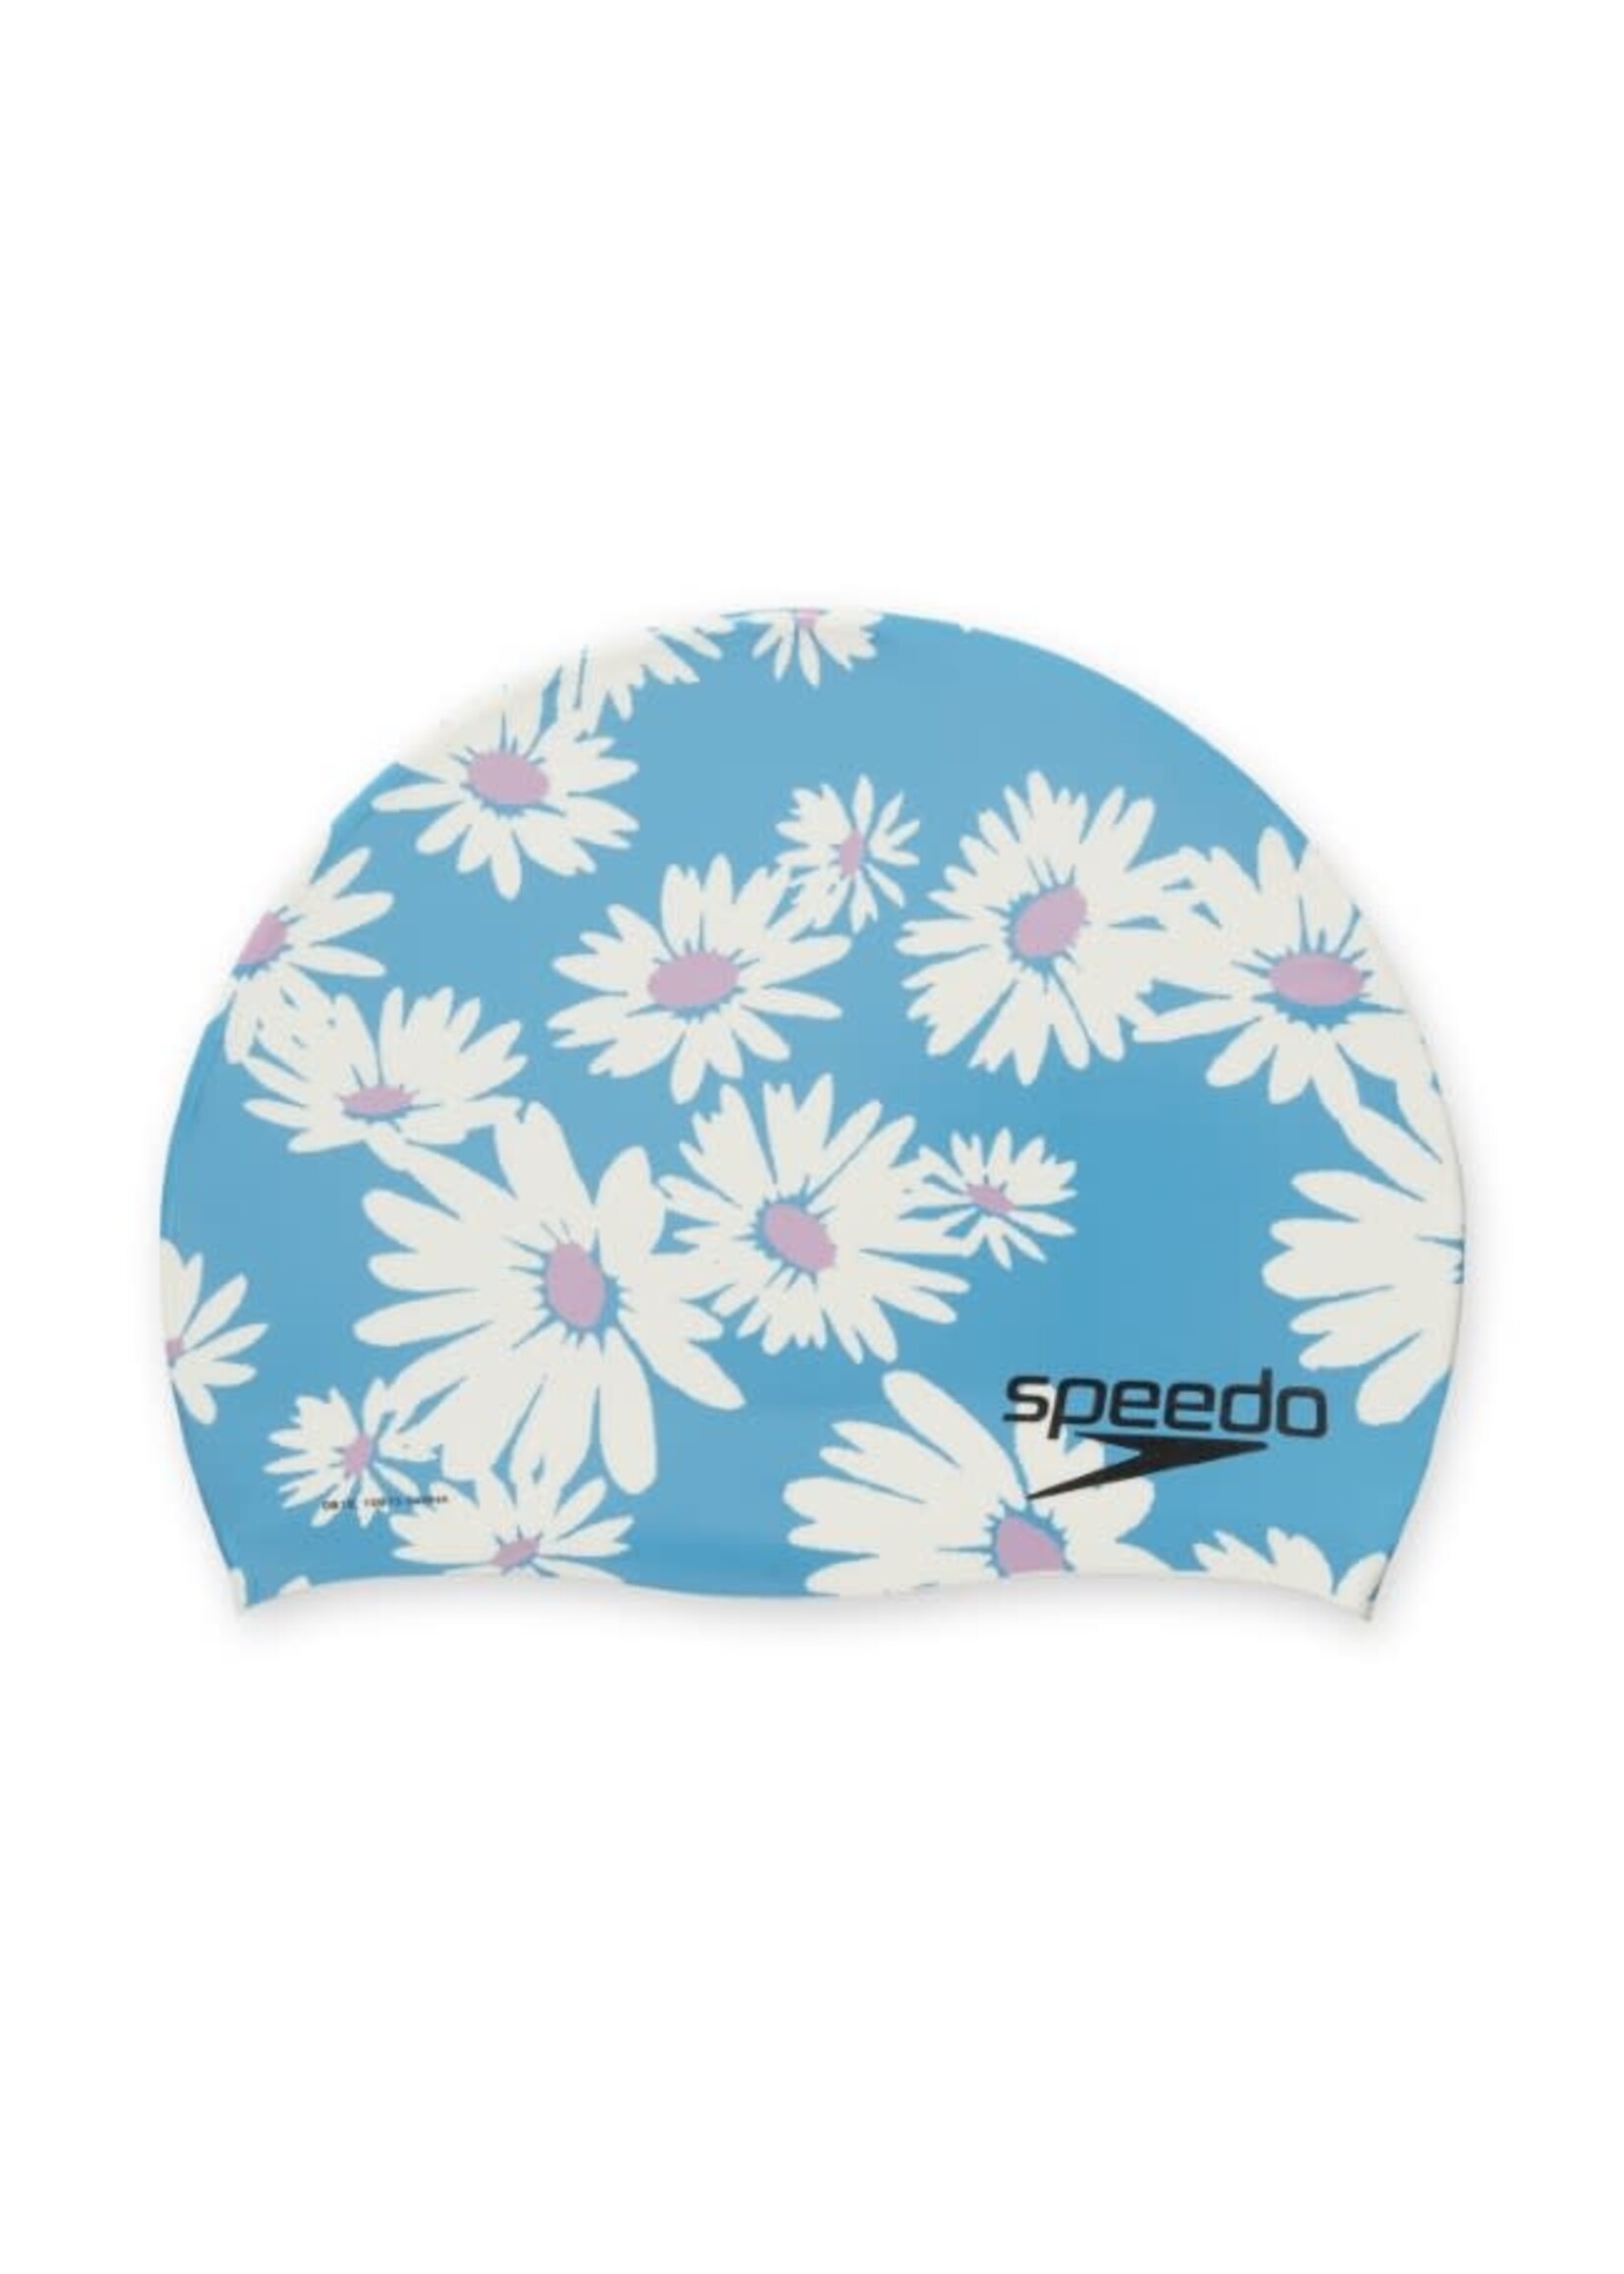 Speedo Wild Daisy Silicone Cap Blu/Wht/Pnk